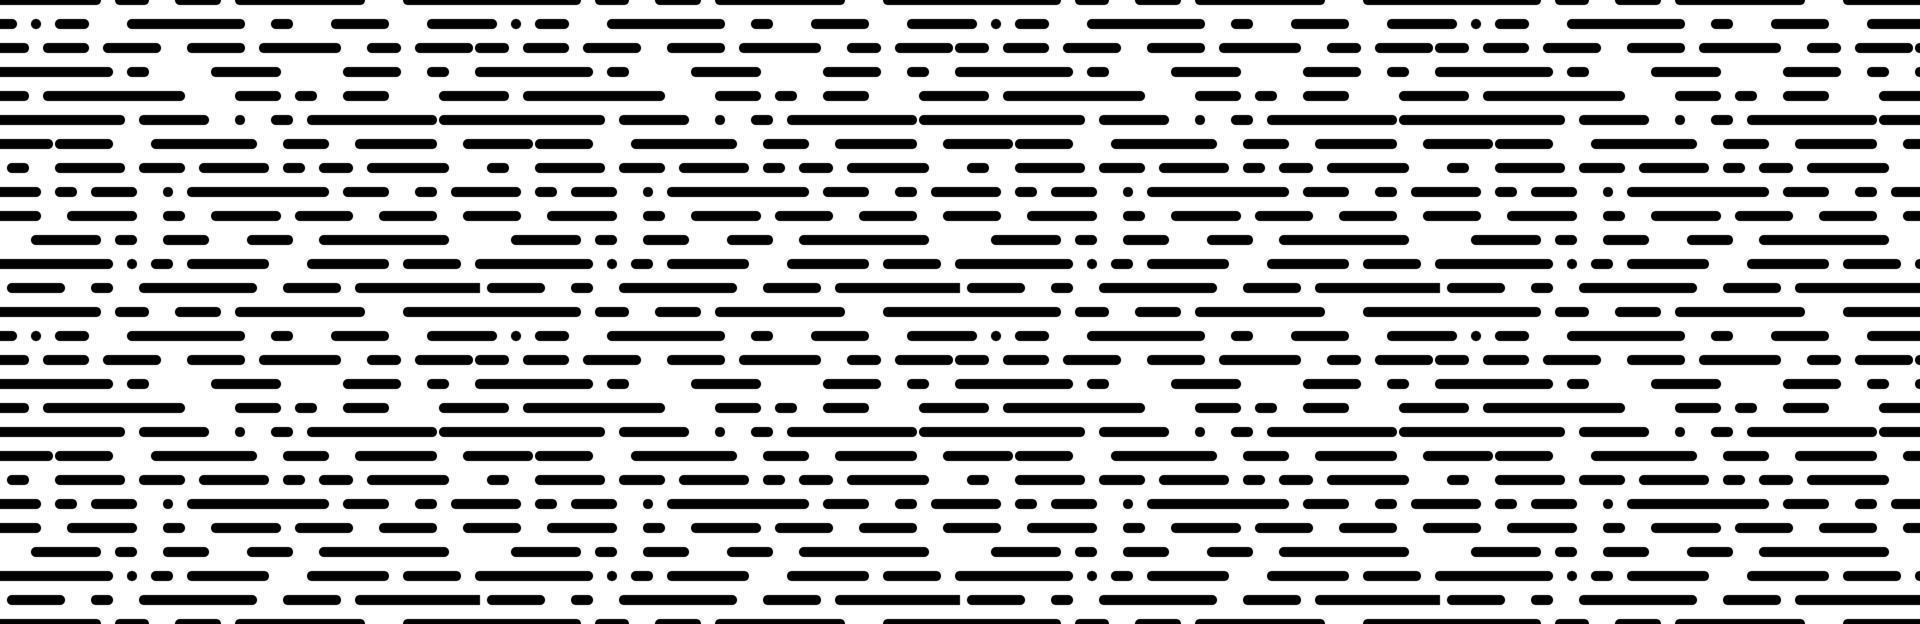 svart vit slumpmässig prickad linje sömlös mönster vektor